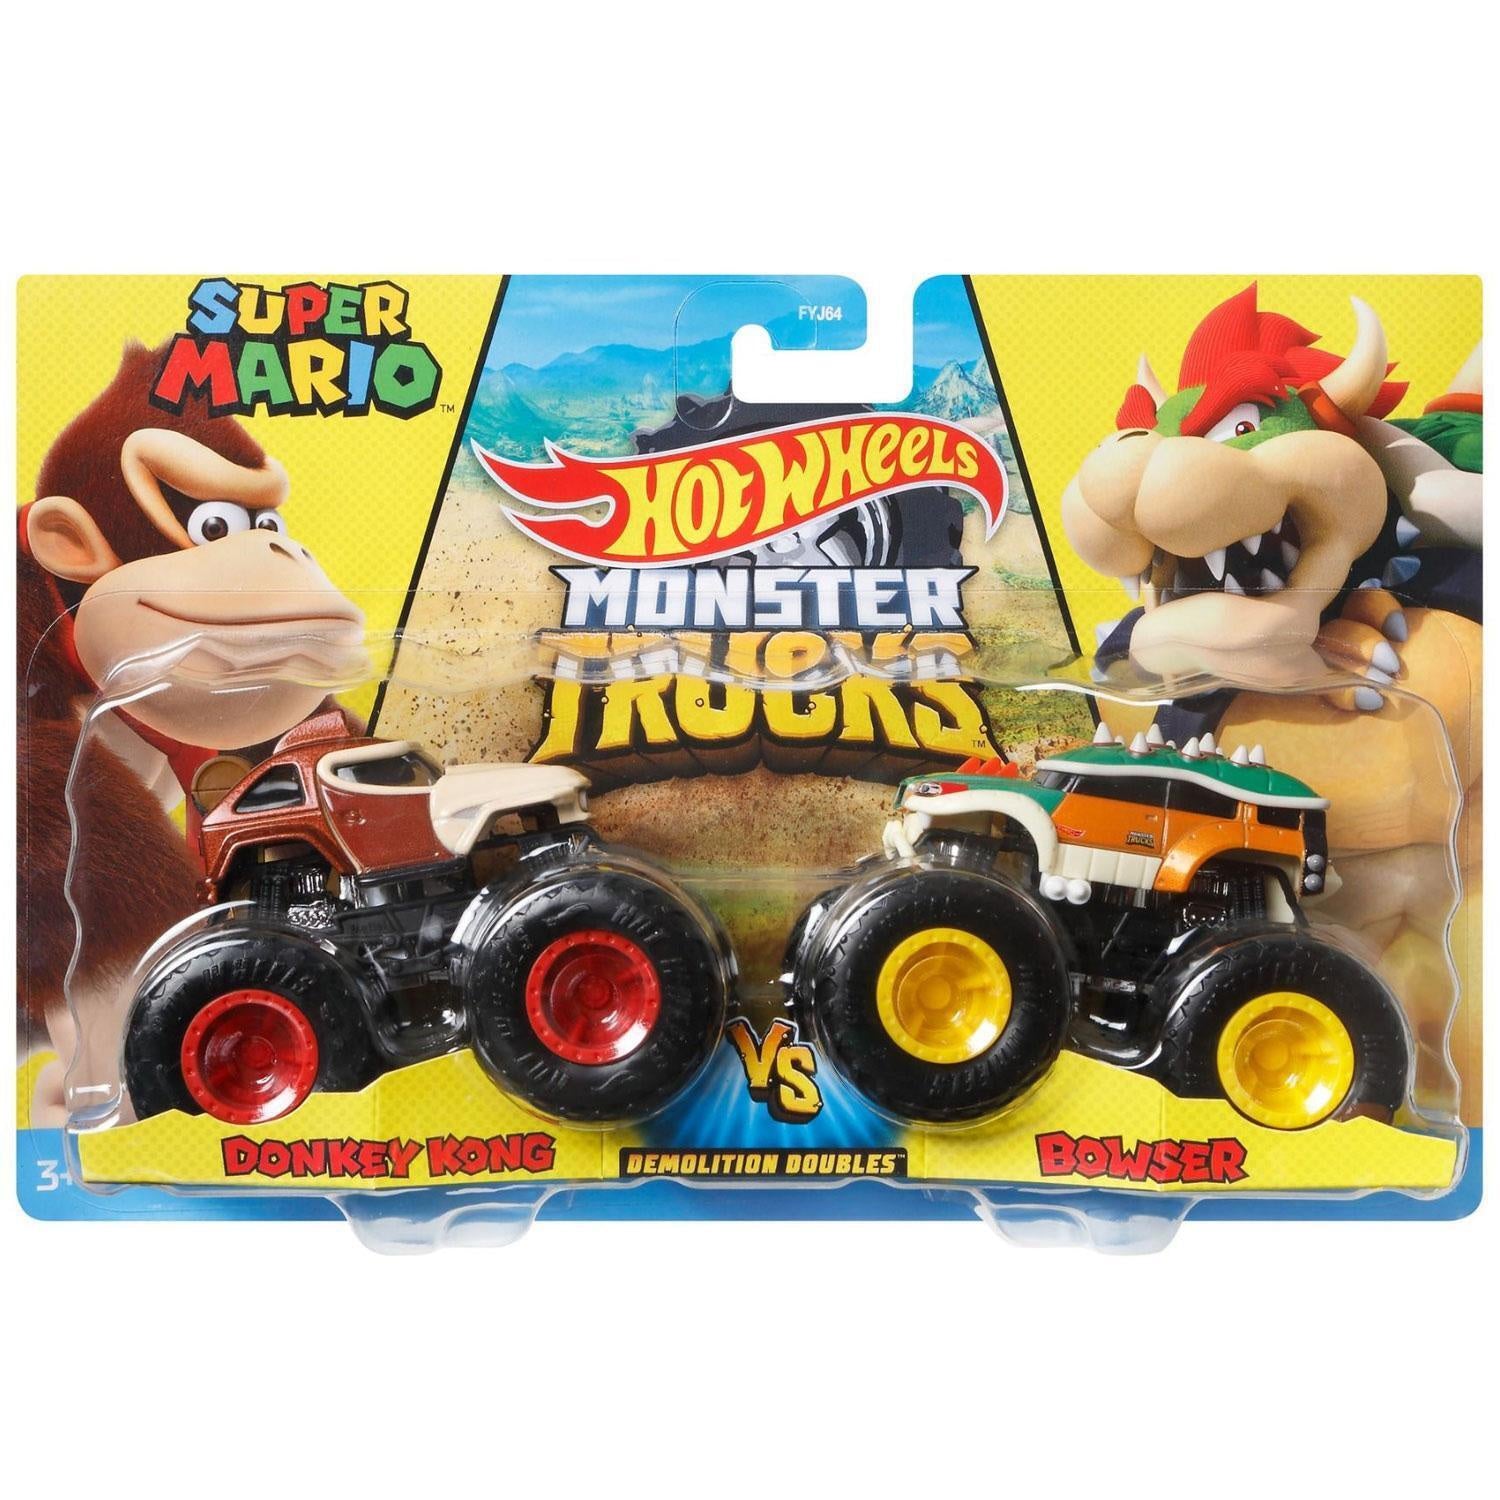 Hot Wheels Monster Trucks Super Mario Twin Pack Donkey Kong vs Bowser